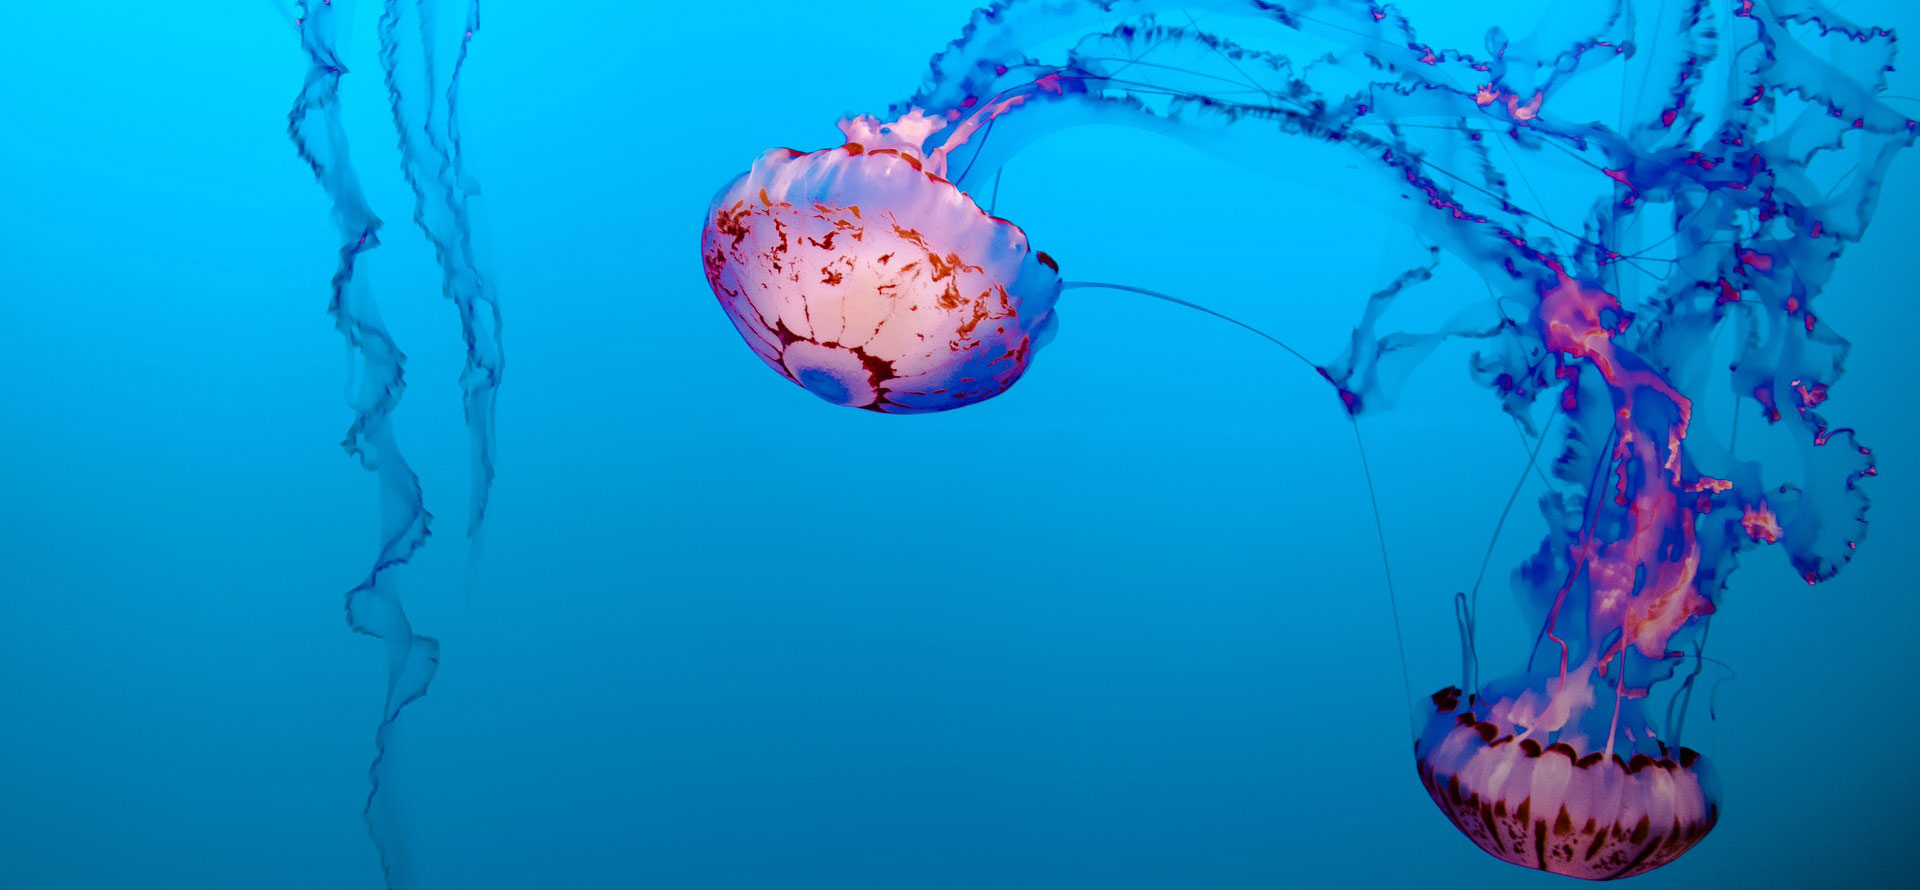 Jellyfish underwater in Texas.